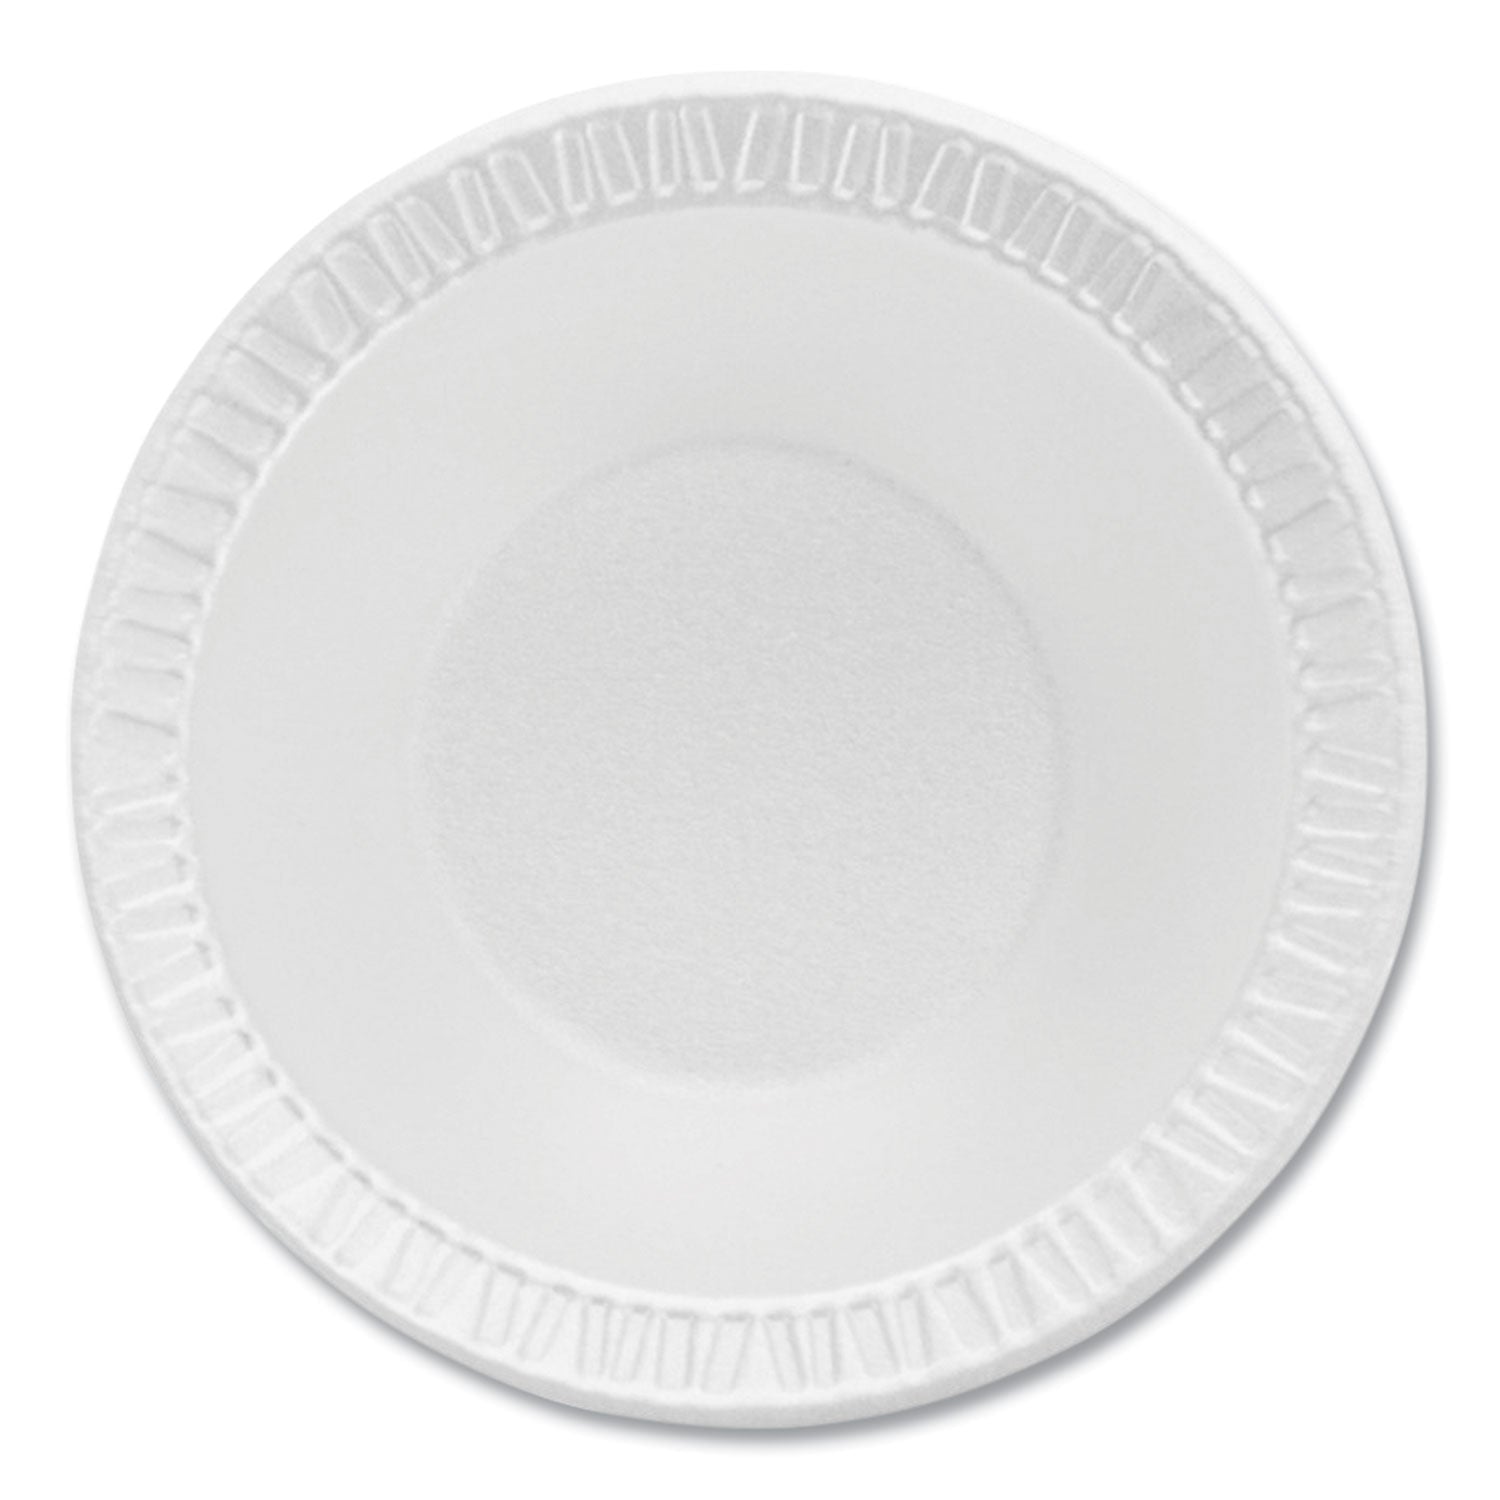 Non-Laminated Foam Dinnerware, Bowl, 5 oz, White, 125/Pack, 8 Packs/Carton - 